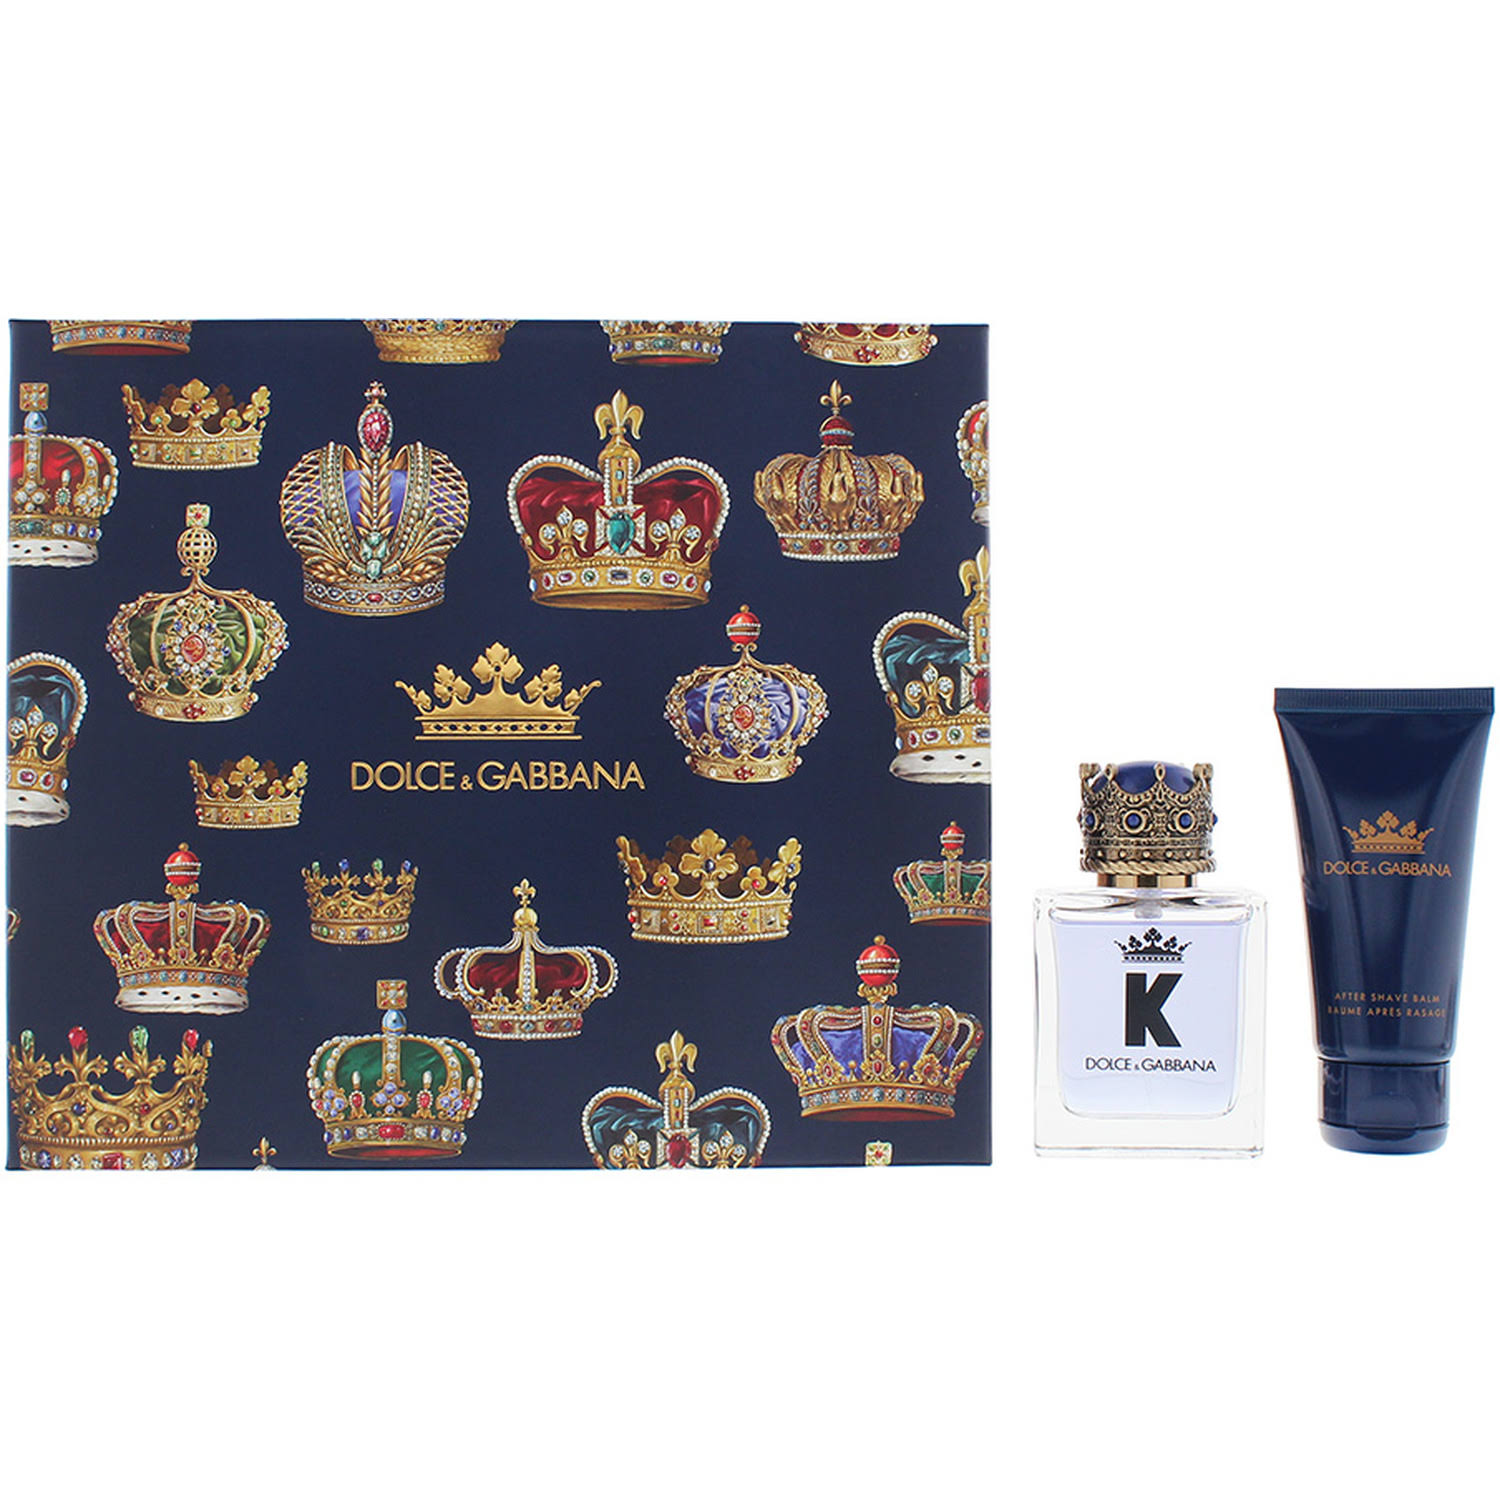 K by Dolce & Gabbana Gift Set for Men